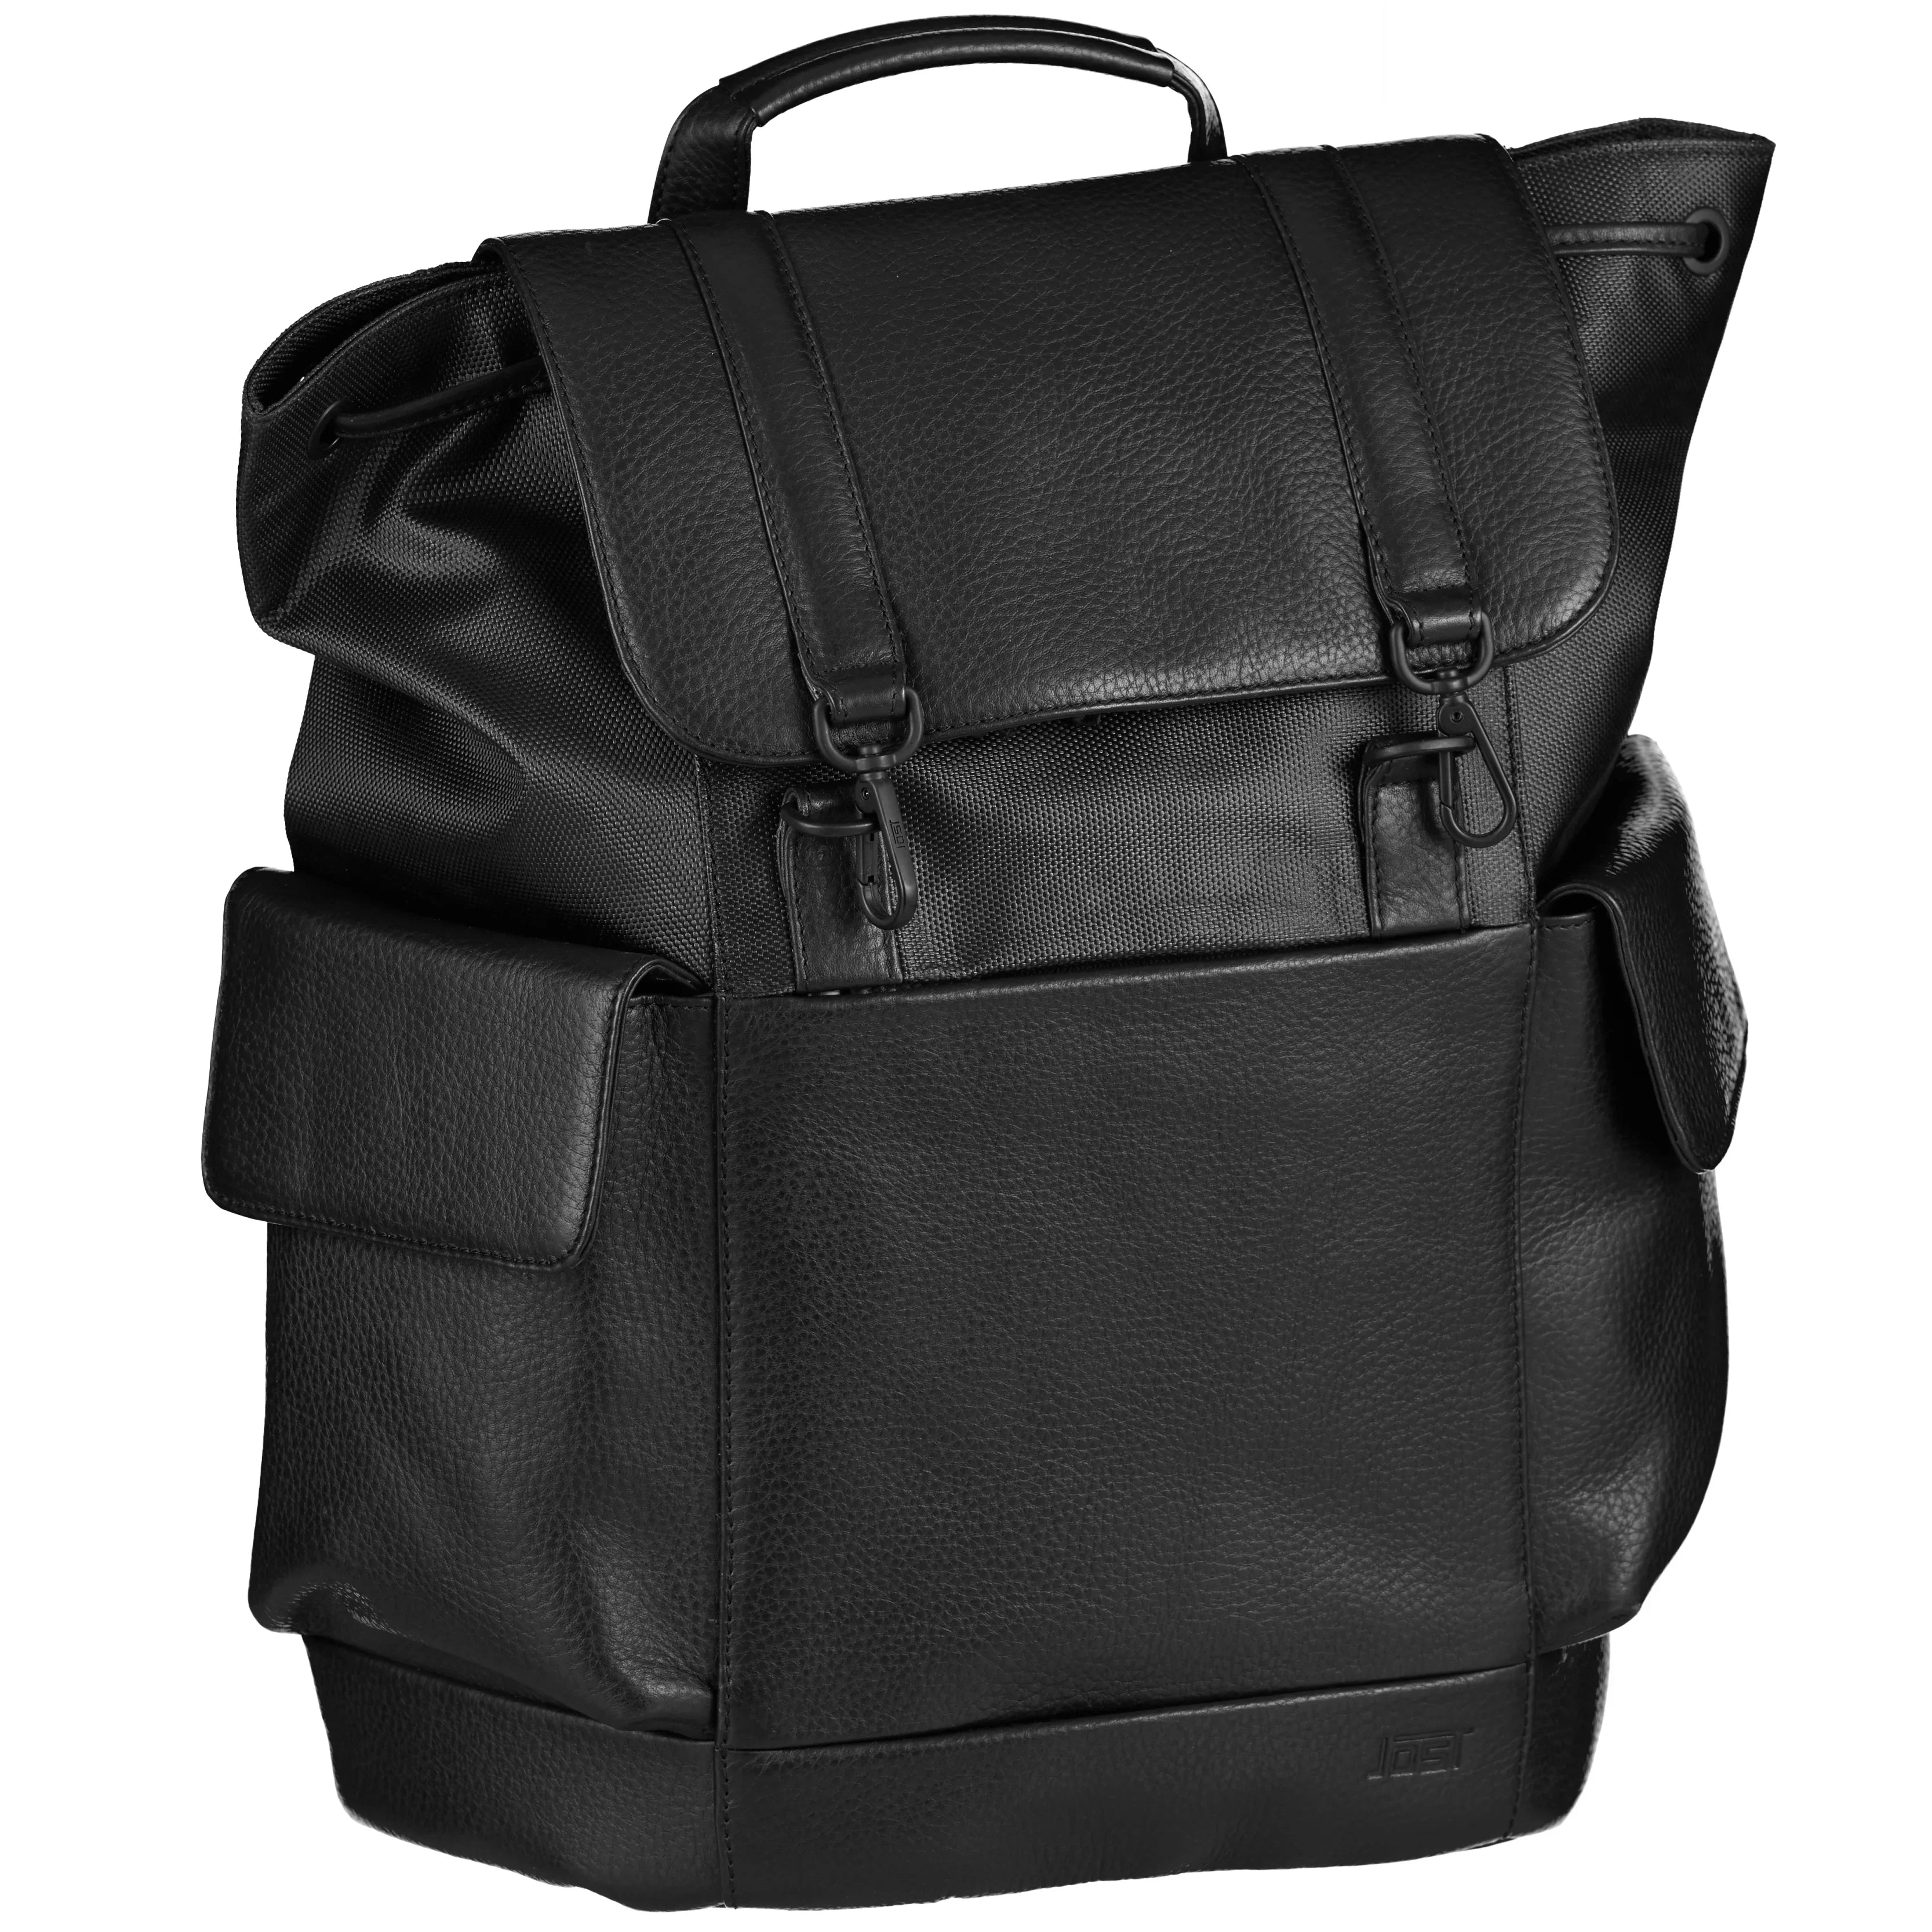 Jost Stockholm pouch backpack 46 cm - black